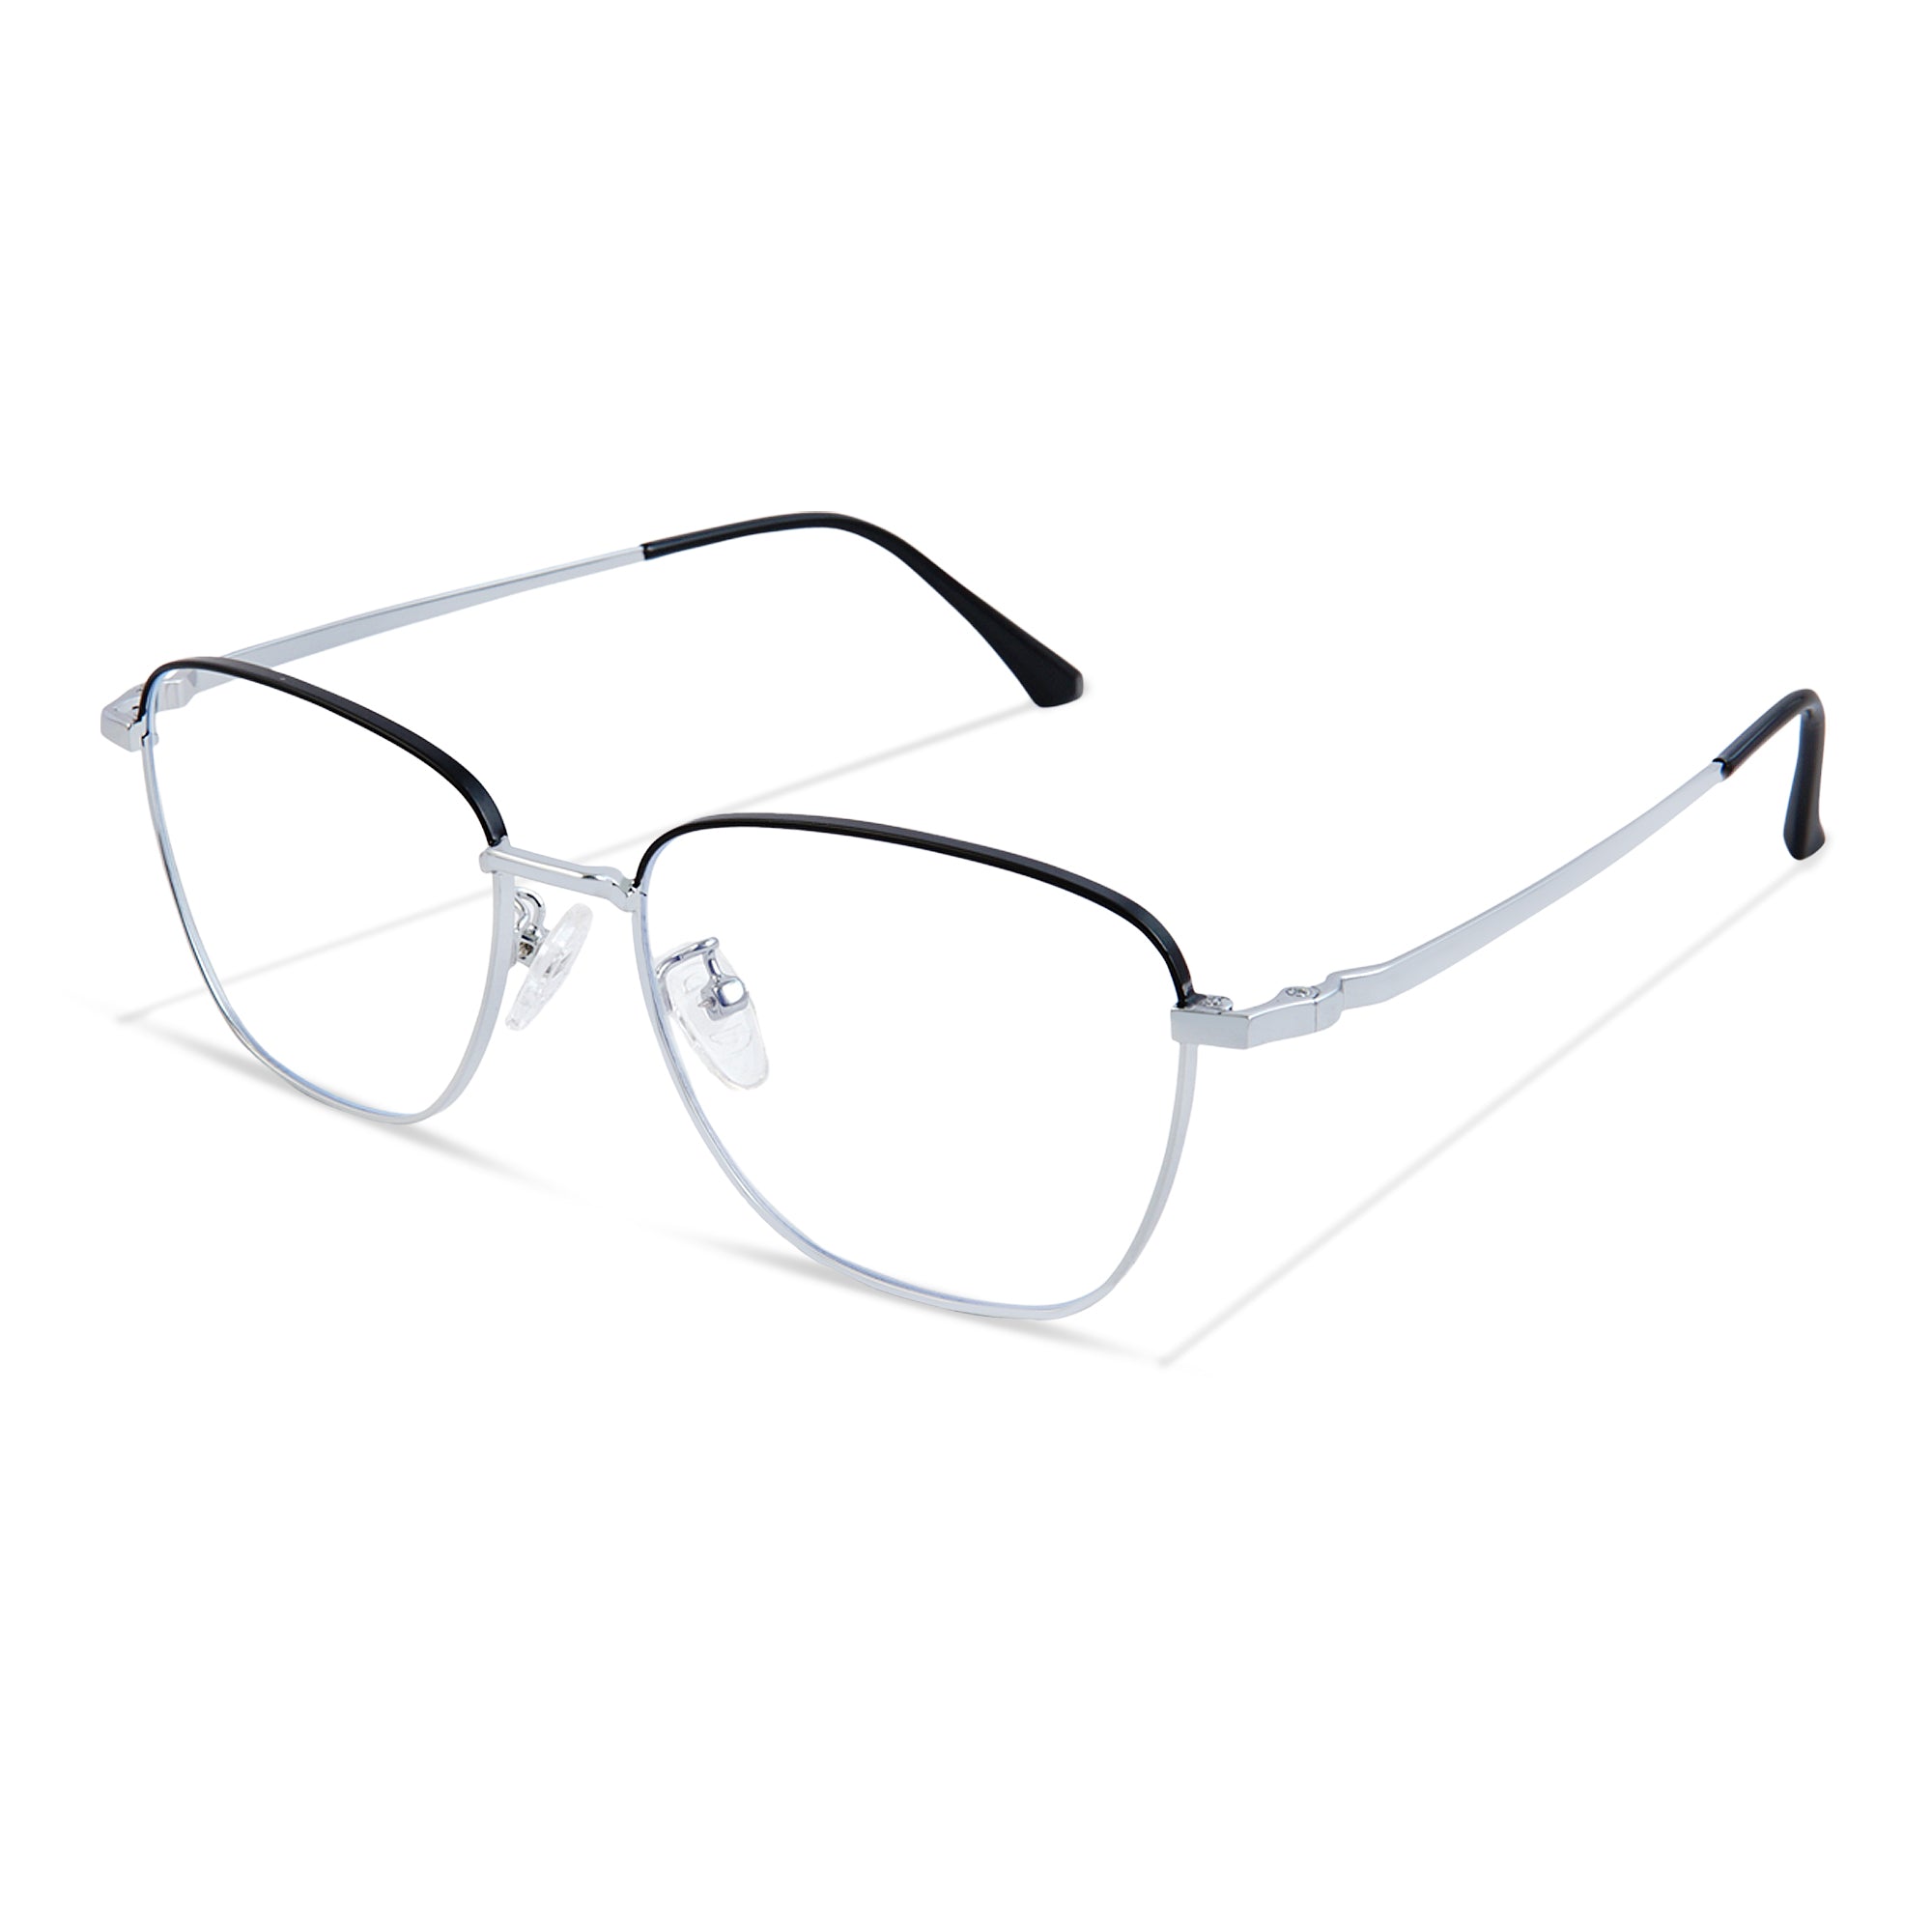 Black Silver Square Metal Eyeglasses - L51003